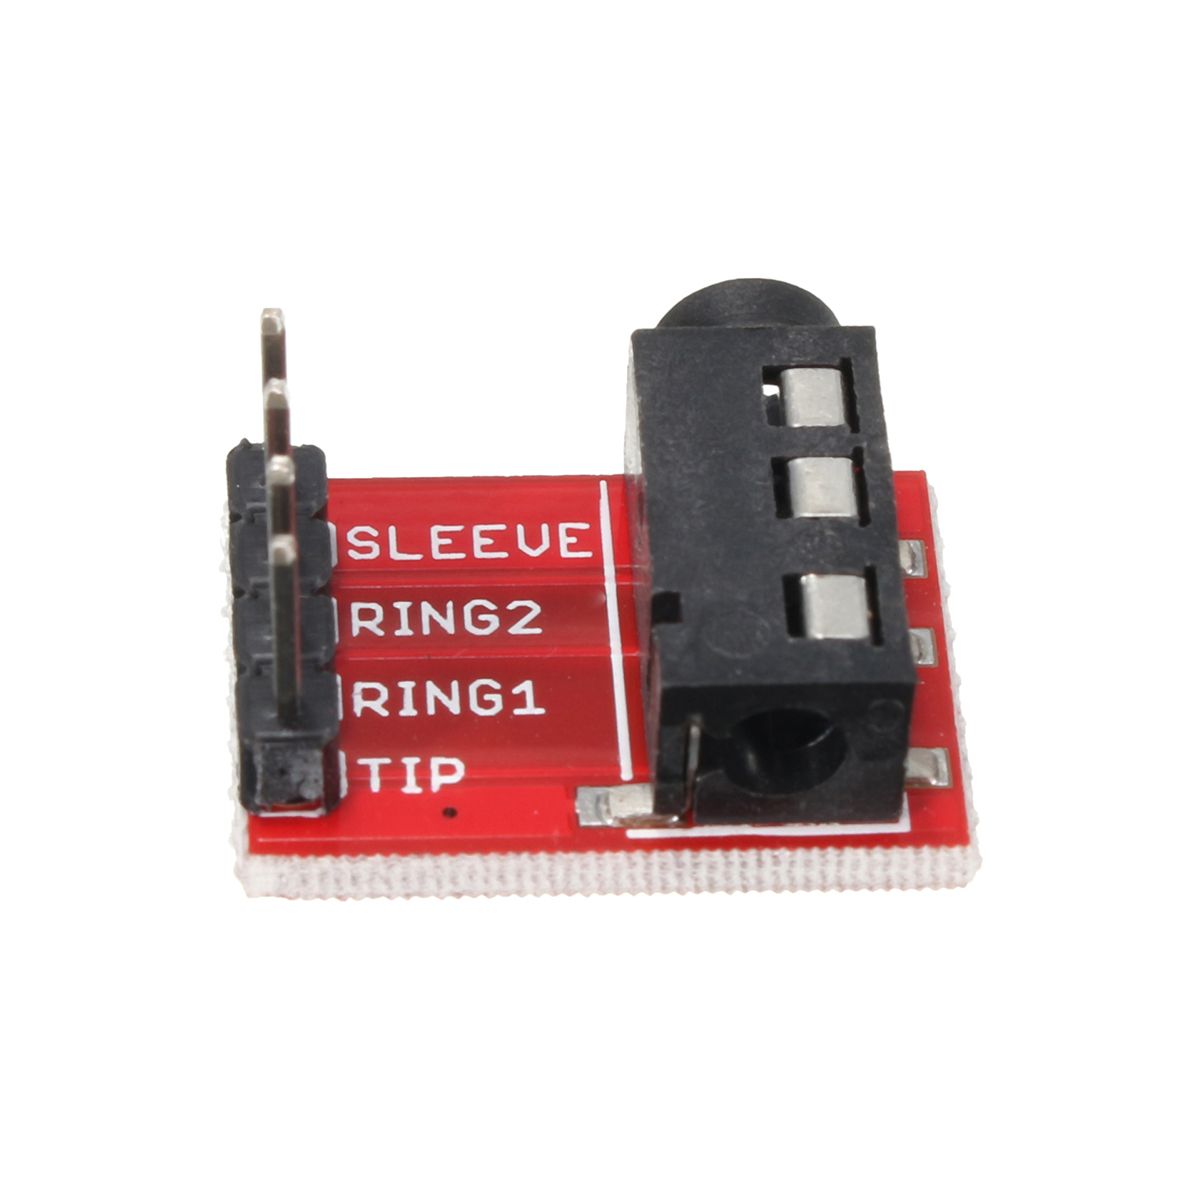 20pcs-35mm-Plug-Jack-Stereo-TRRS-Headset-Audio-Socket-Breakout-Board-Extension-Module-1405161